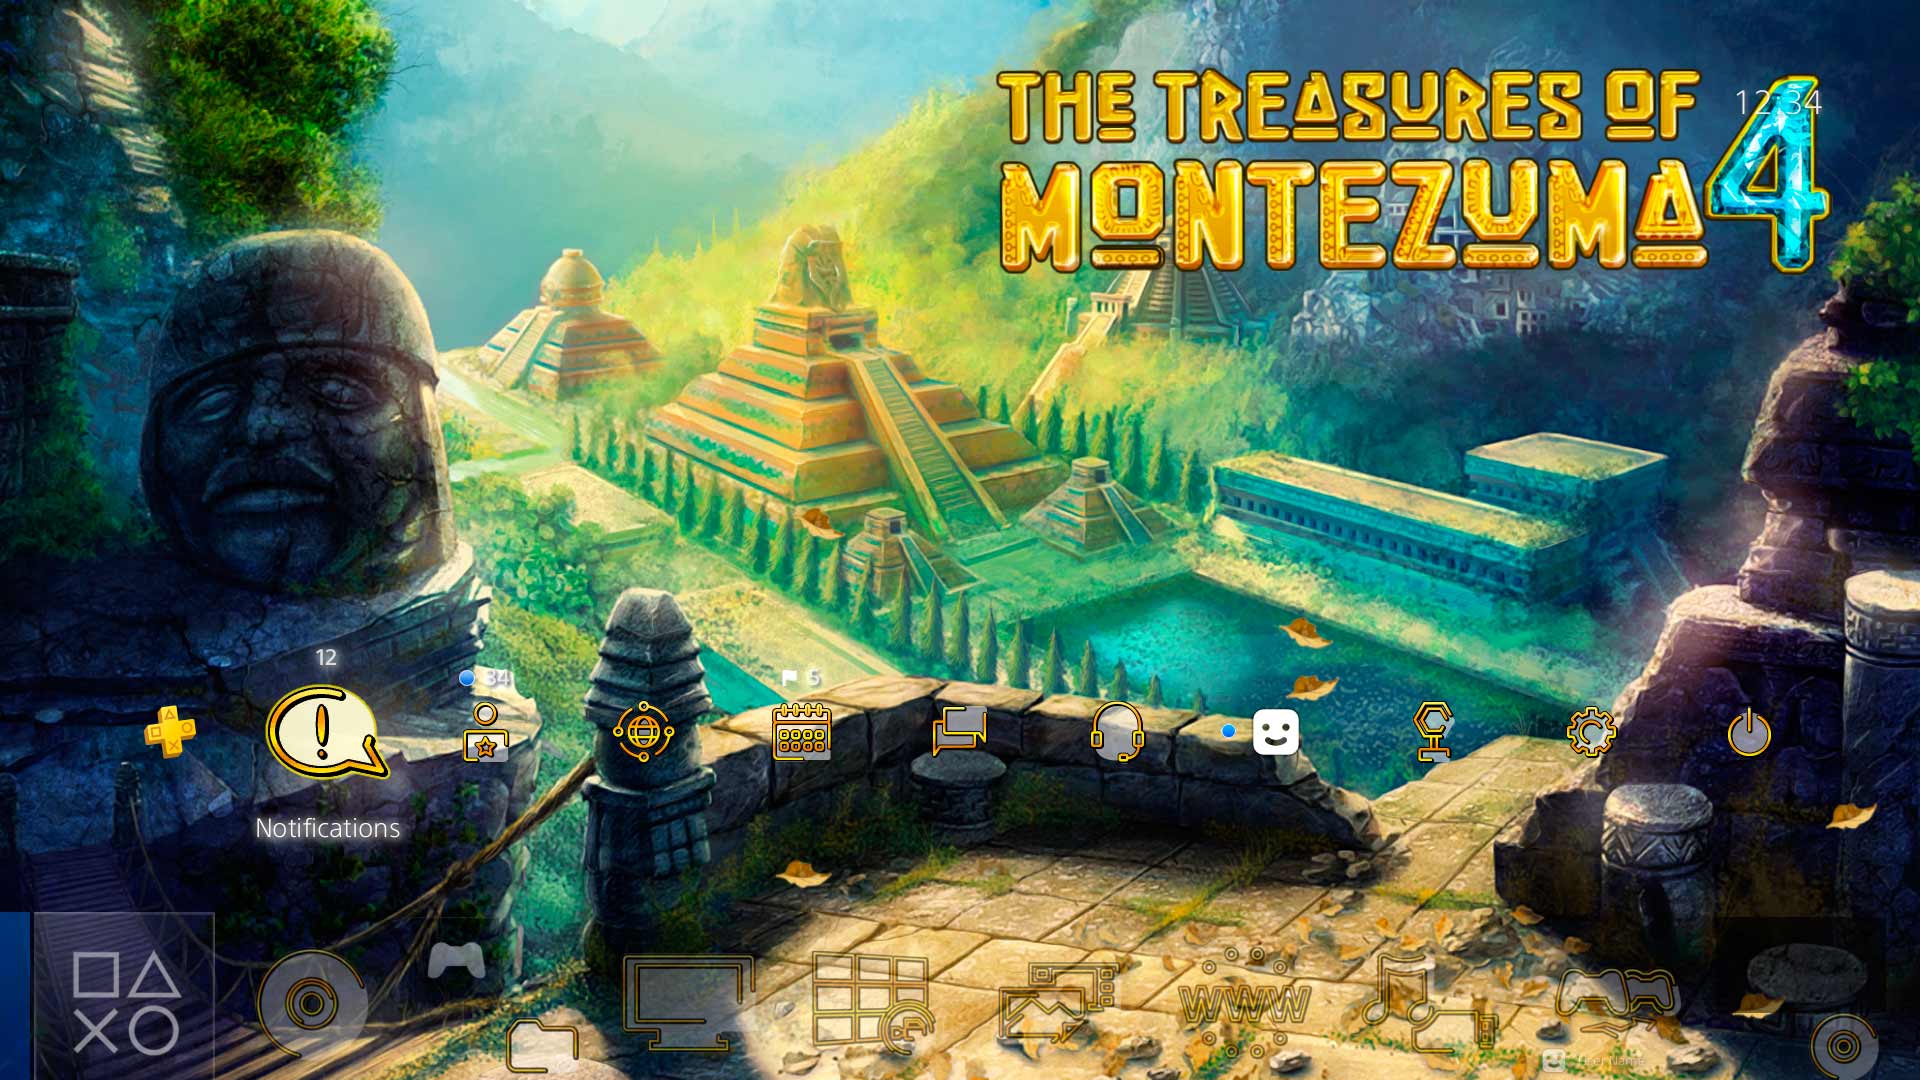 Игра сокровища монтесумы на русском. The Treasures of Montezuma 2. Treasures of Montezuma: Arena PS Vita. The Treasures of Montezuma 4. The Treasures of Montezuma PSP.